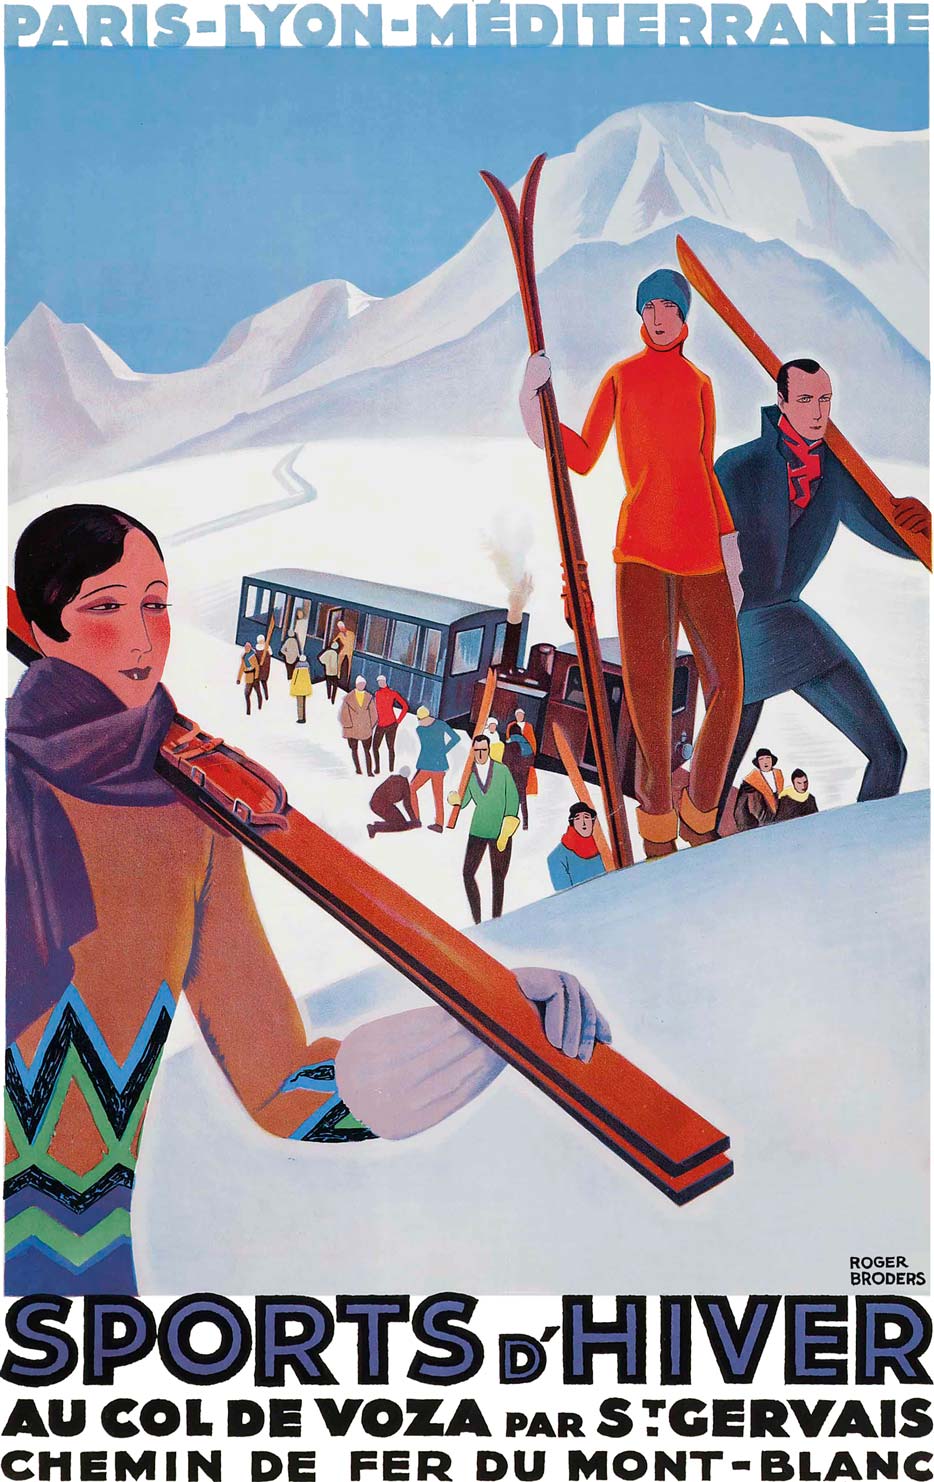 Germany Deutsche Bundesbahn Winter Ski Europe Travel Advertisement Art Poster 